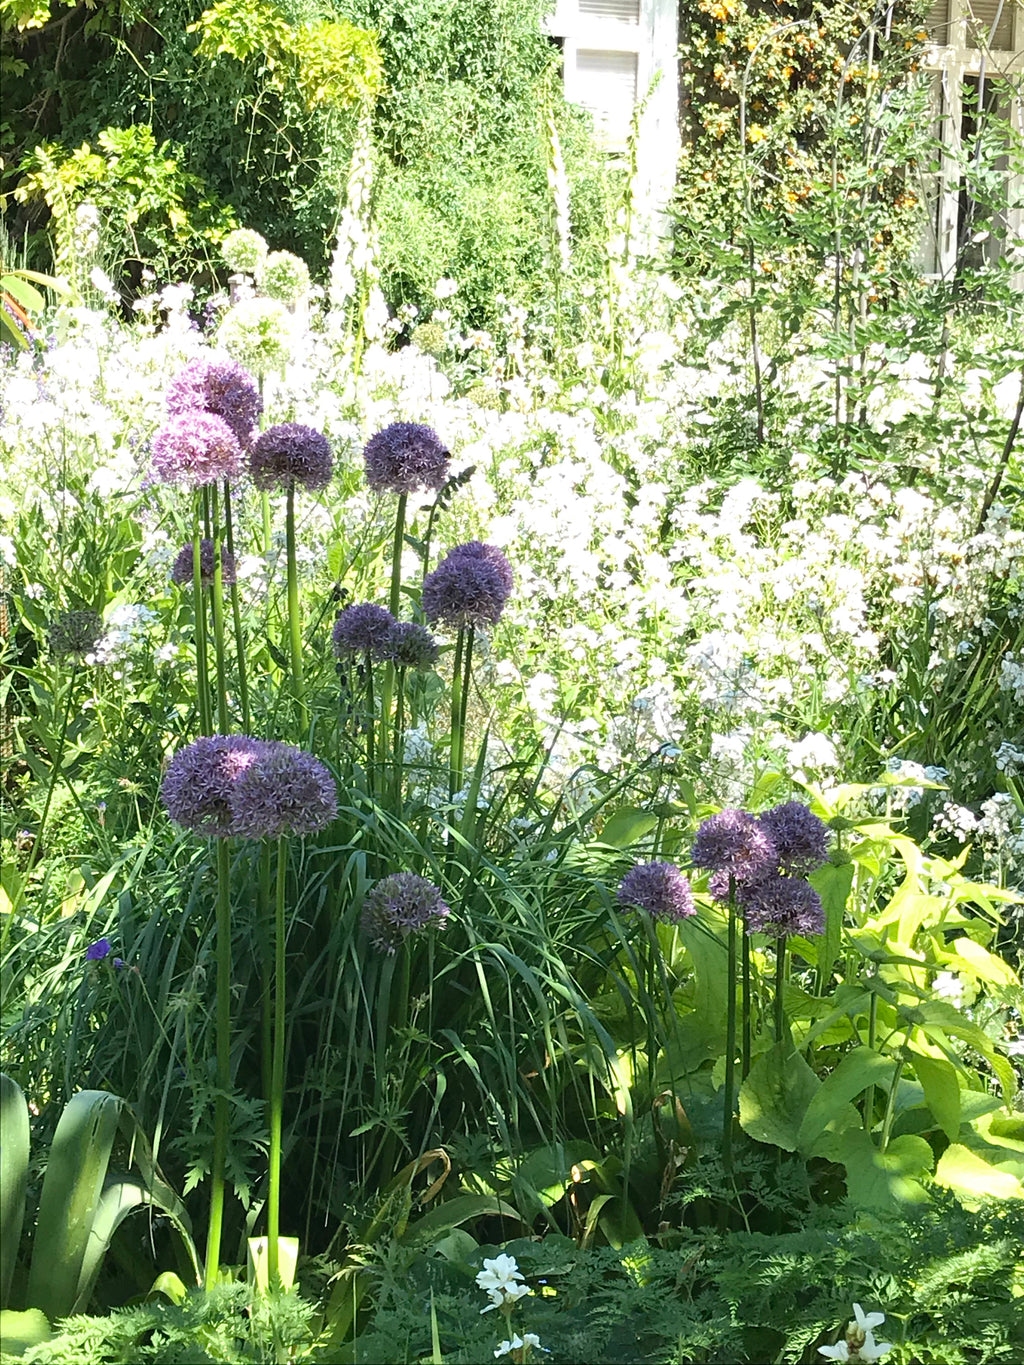 30 Allium Bulbs - Mixed Varieties - Plant Yourself (Free UK Postage)